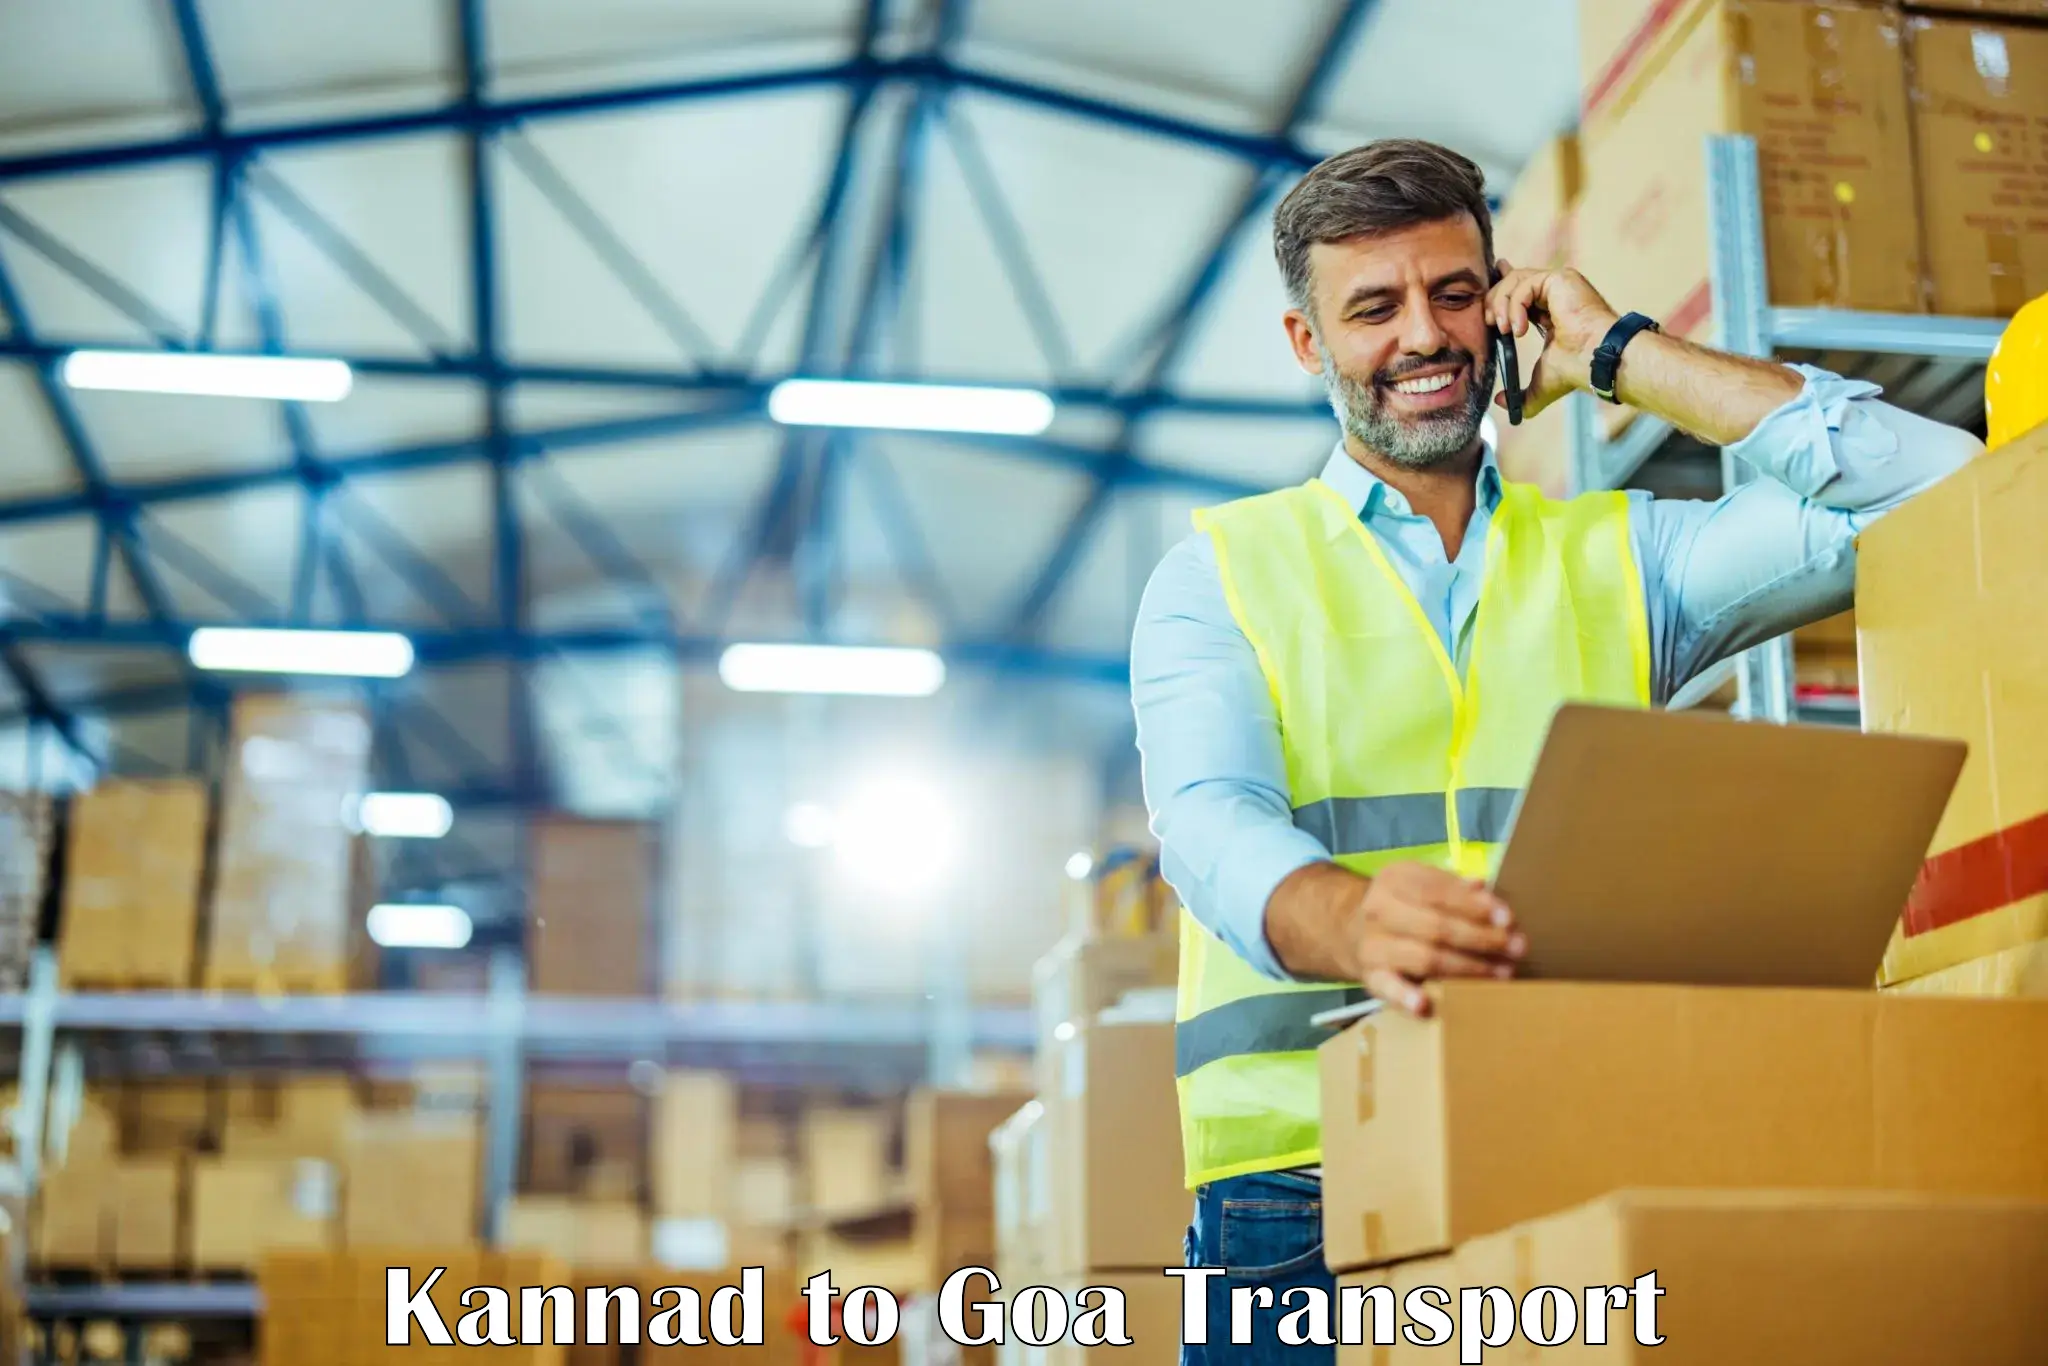 Shipping partner Kannad to Goa